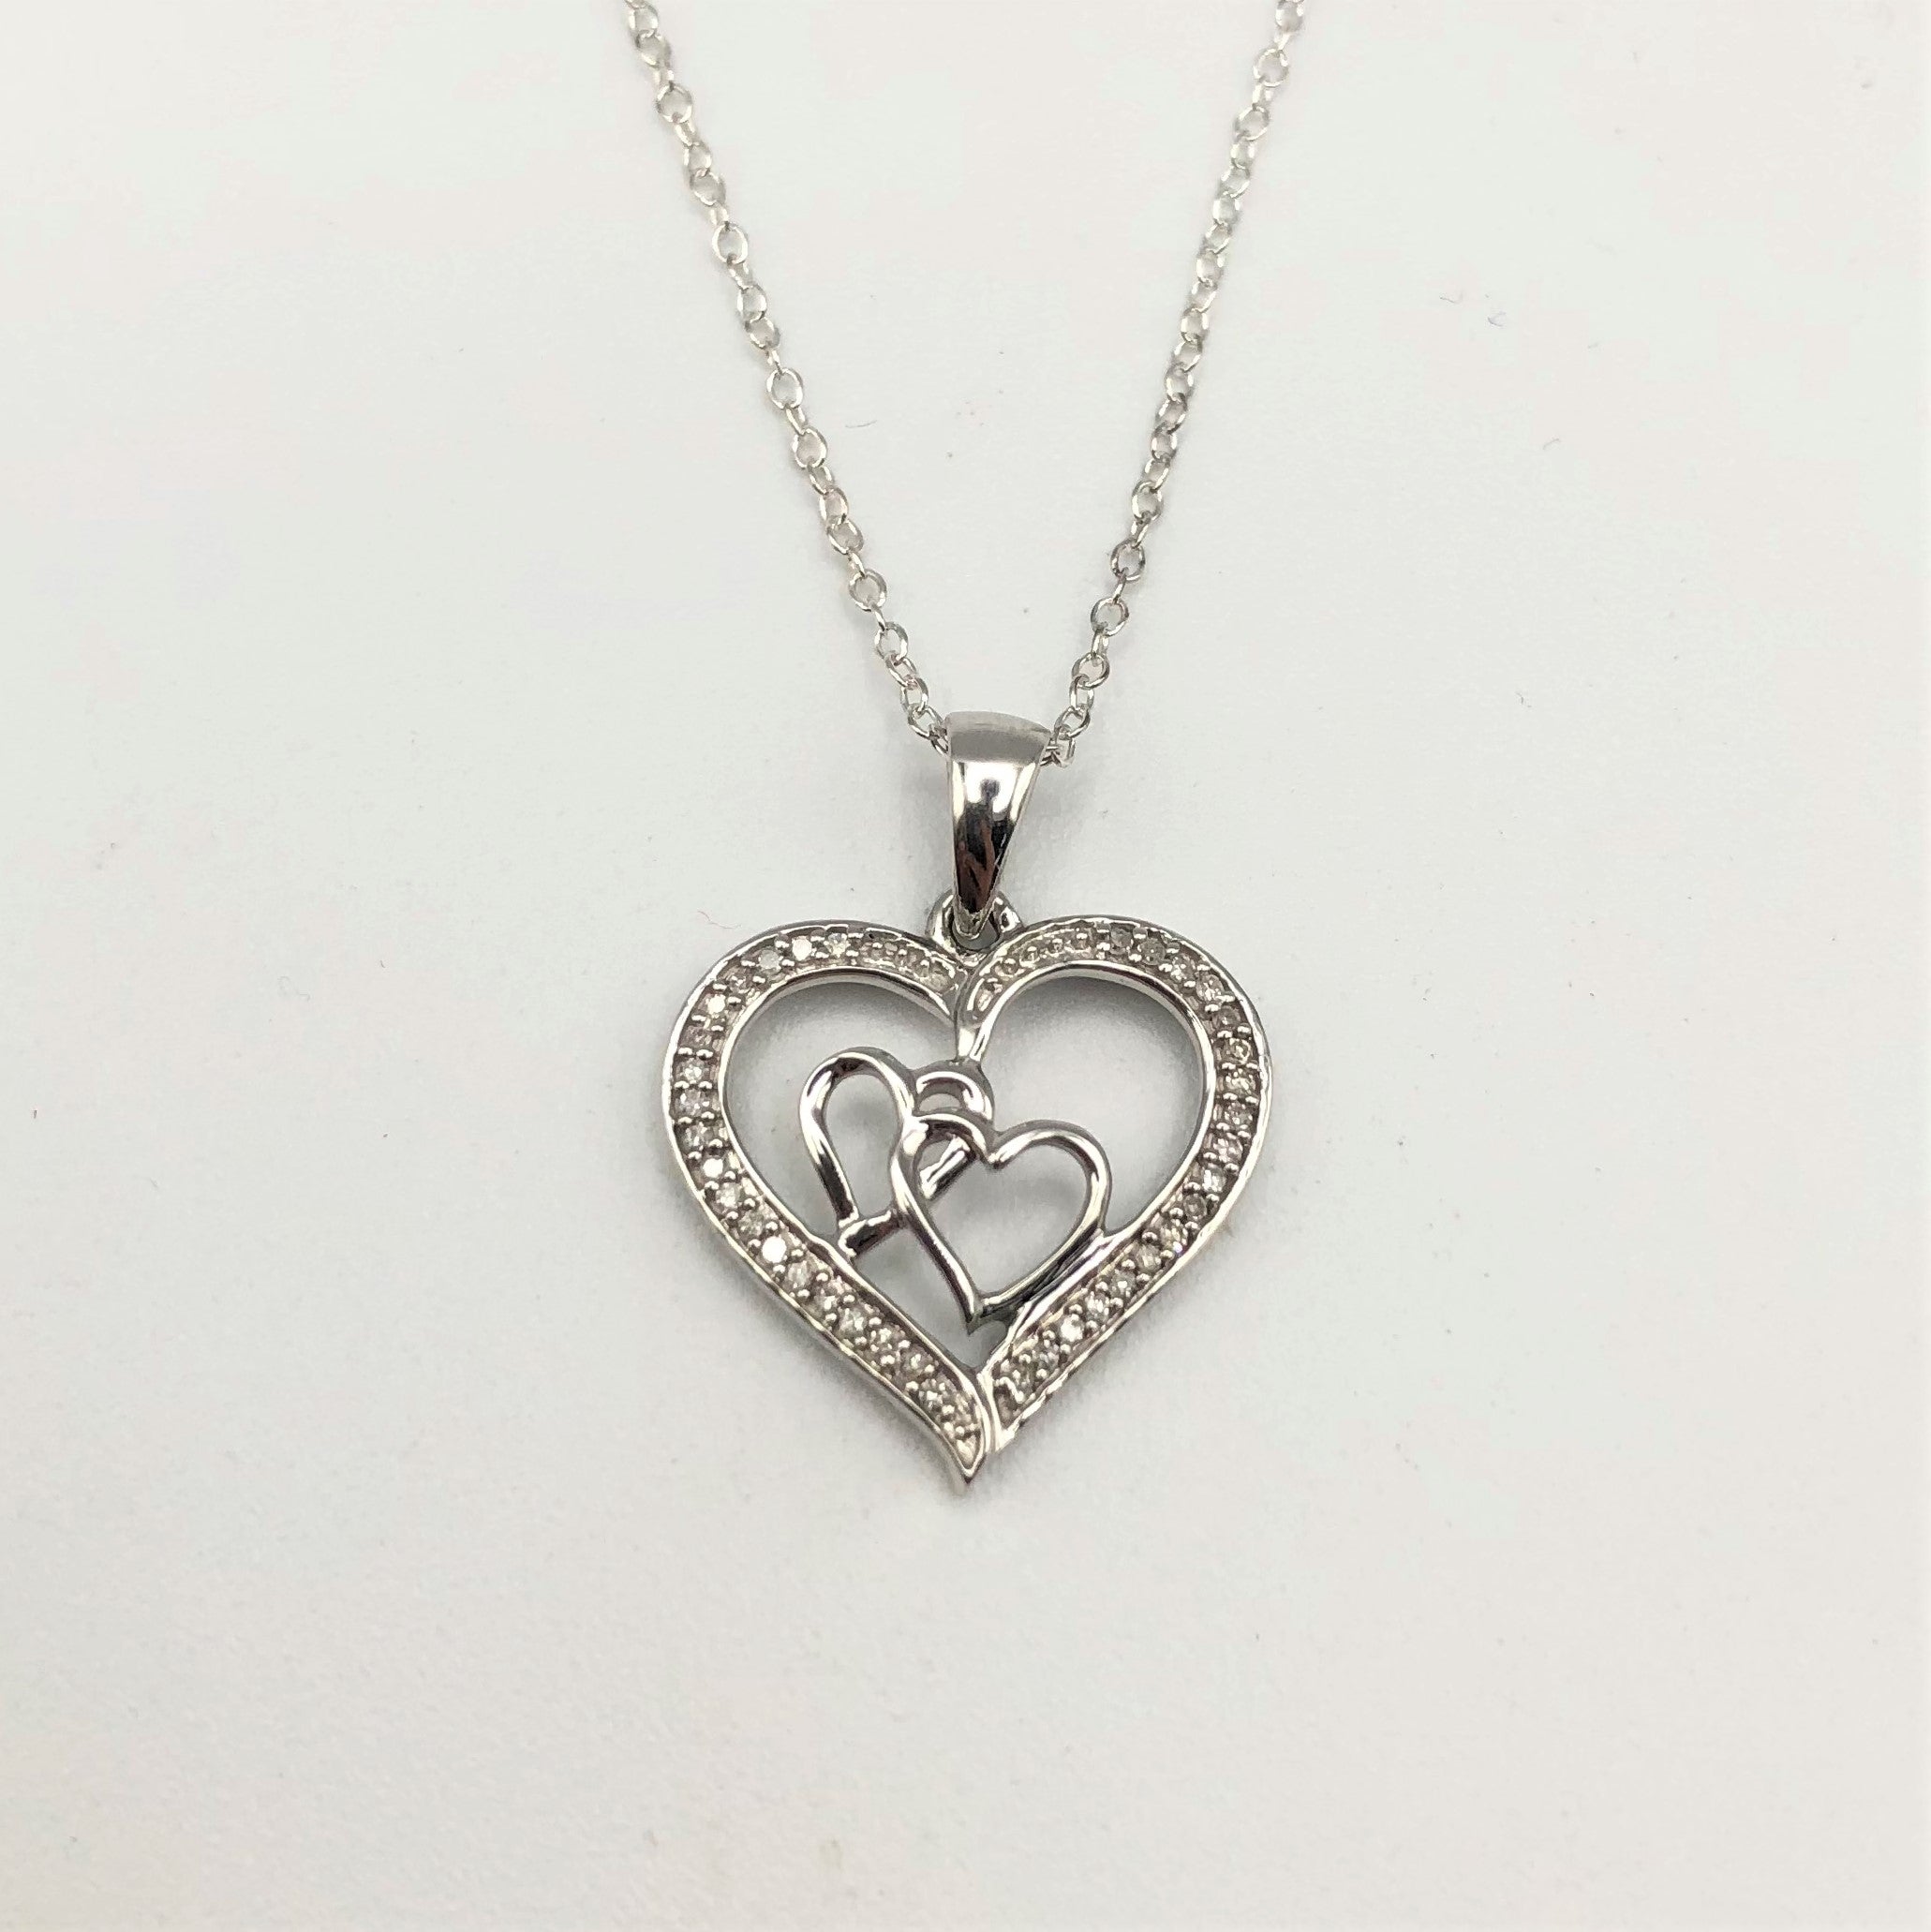 Sterling Silver 1/8 Carat TW Diamond Heart Pendant Necklace - Le Vive Jewelry in Riverside